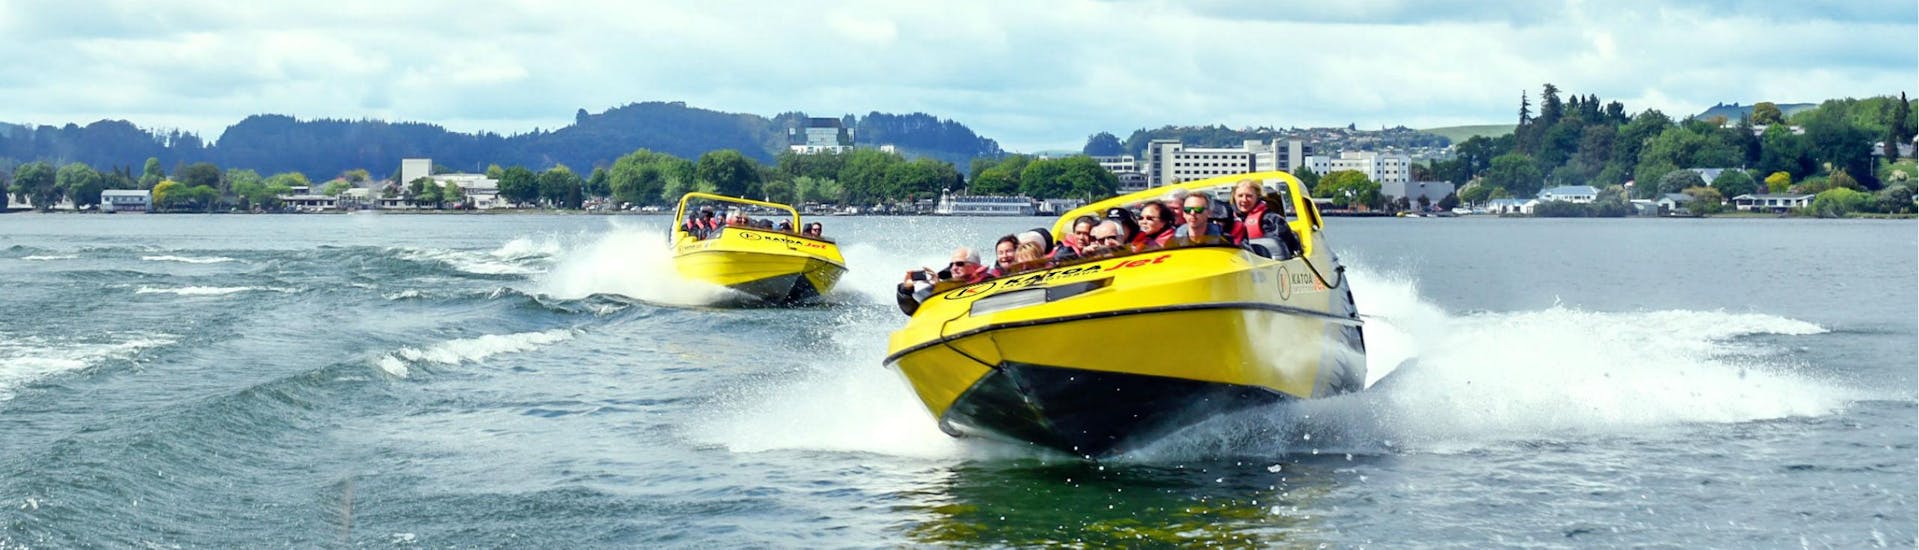 Balade en bateau - Lake Rotorua avec Observation de la faune & Visites touristiques.